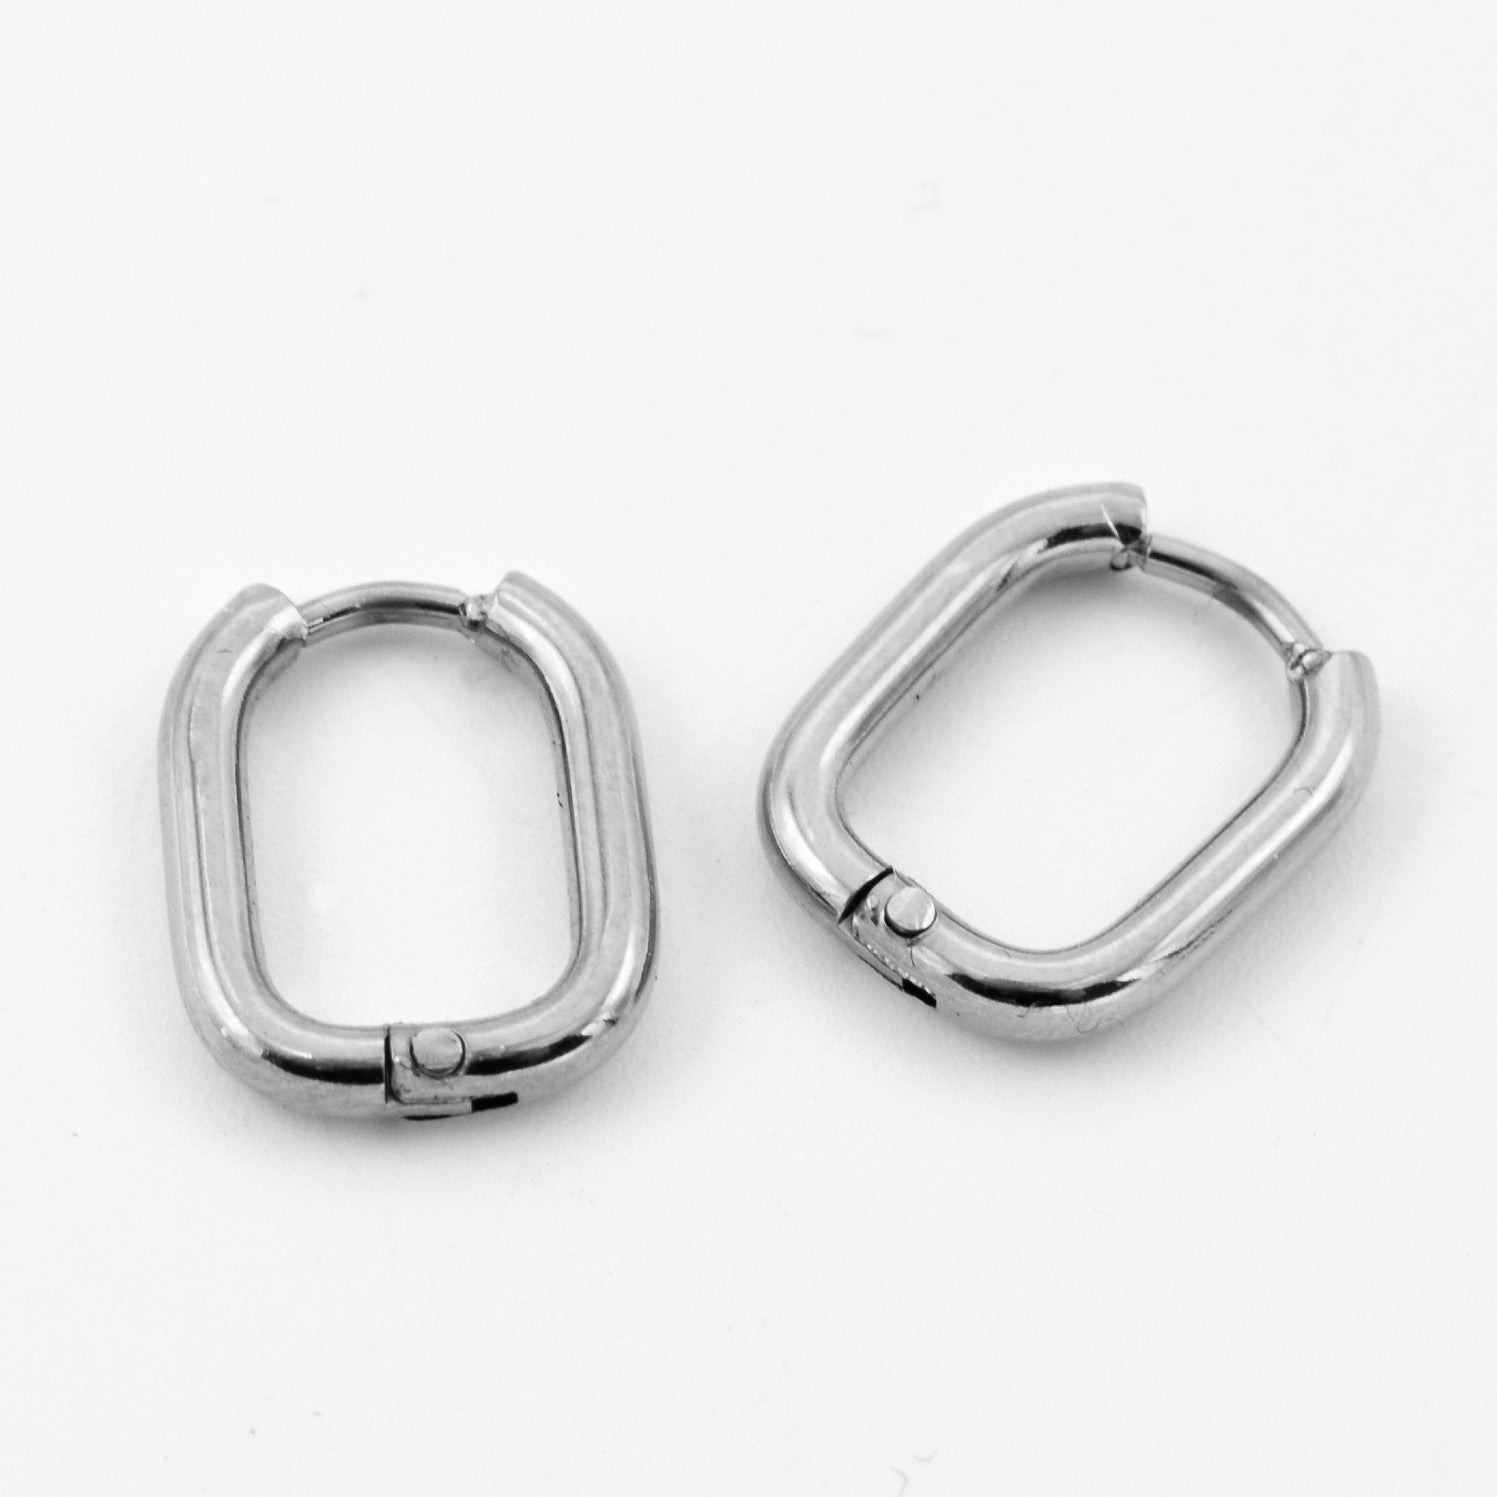 Basic oval earrings